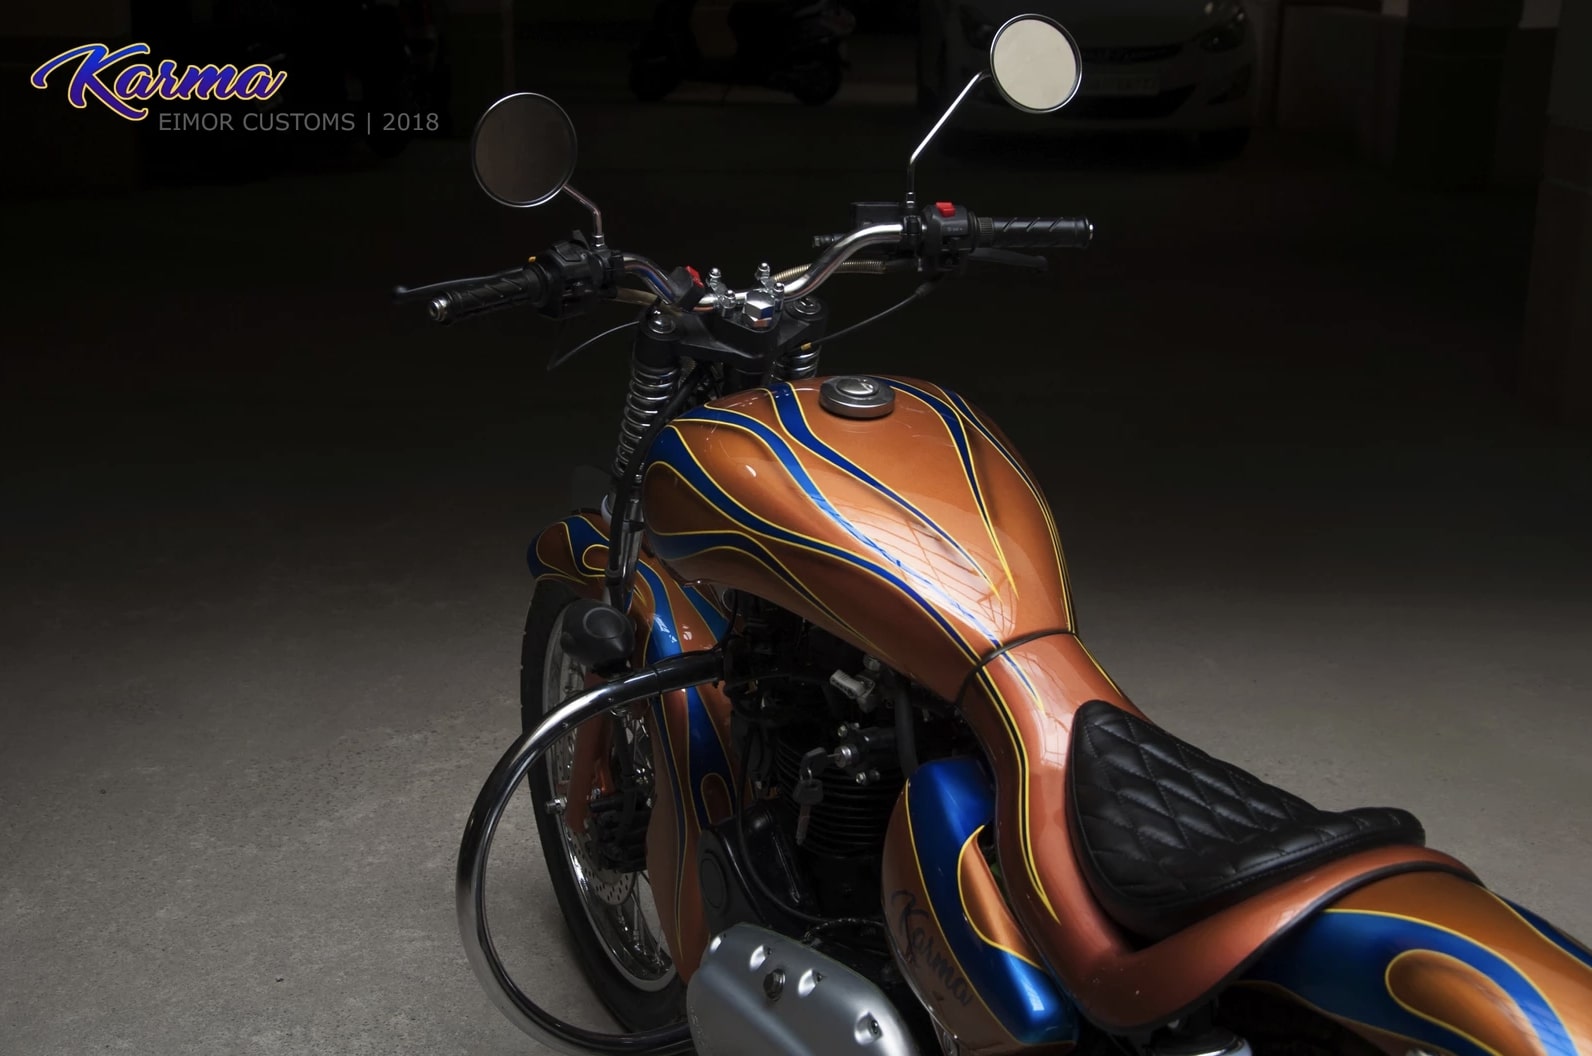 Meet Karma 350 - Based on the Royal Enfield Thunderbird Motorcycle - snap